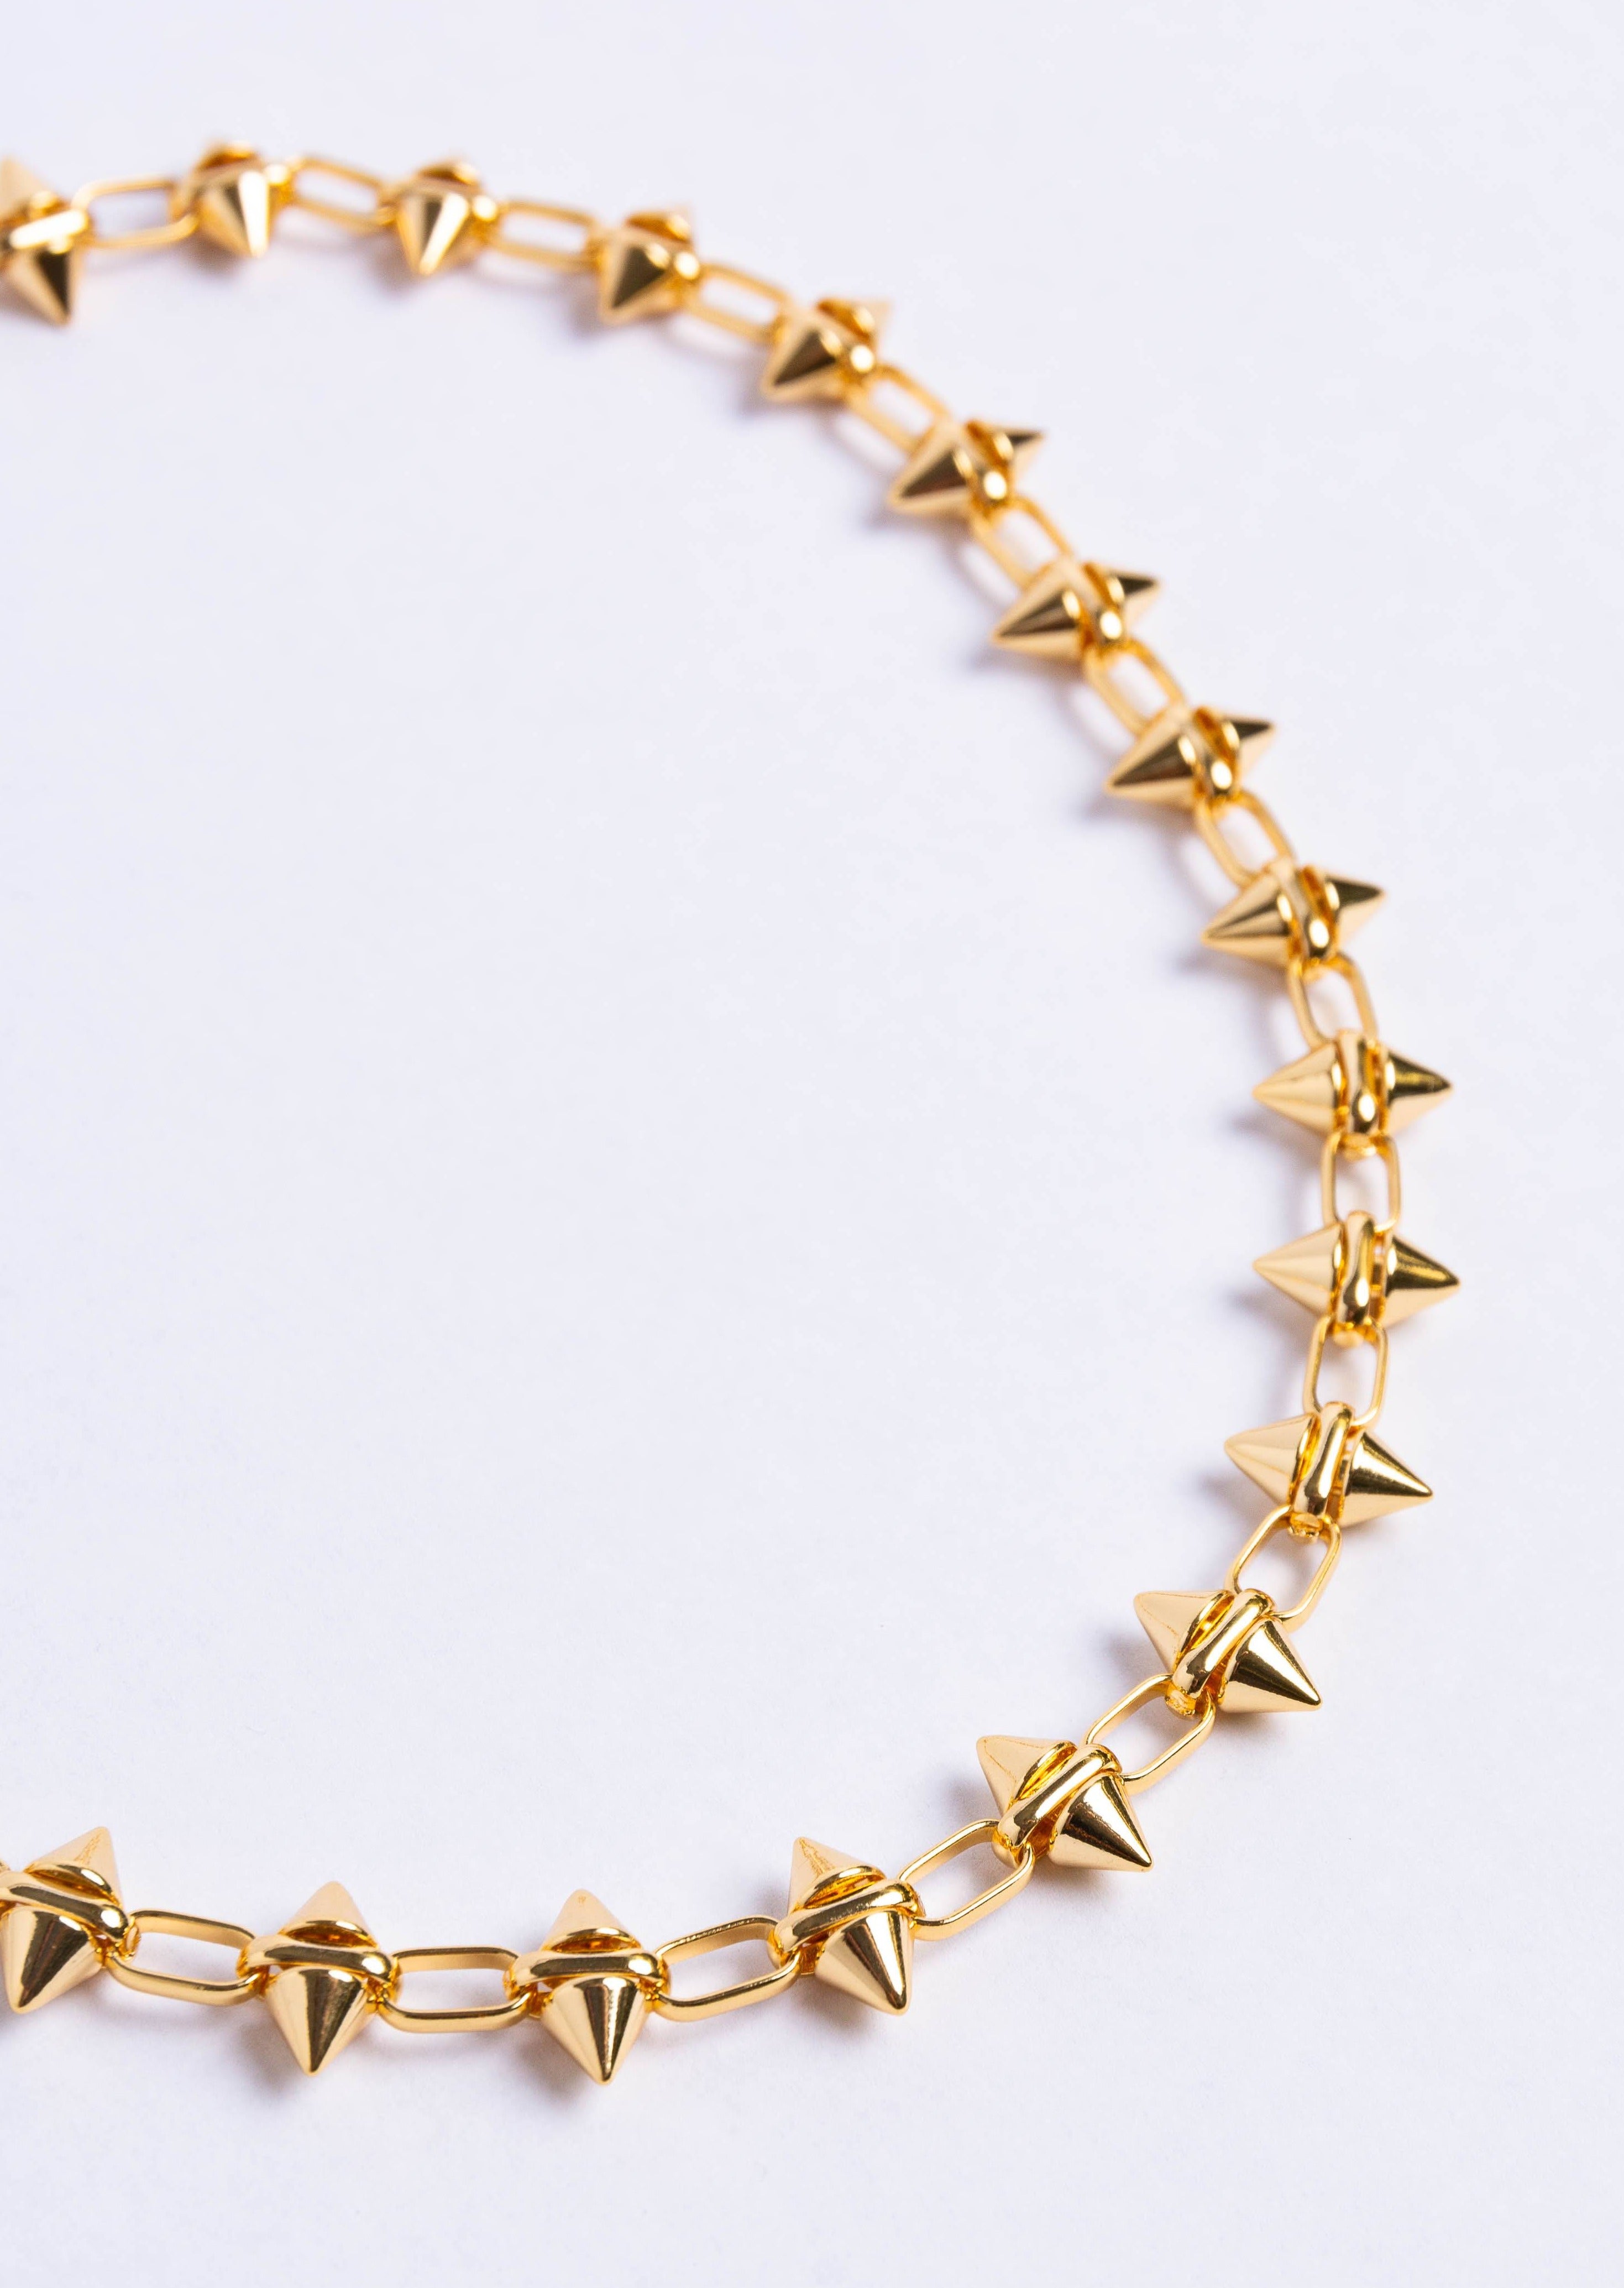 Express Rose Gold Spiked Necklace | Spike necklace, Rose gold, Gold